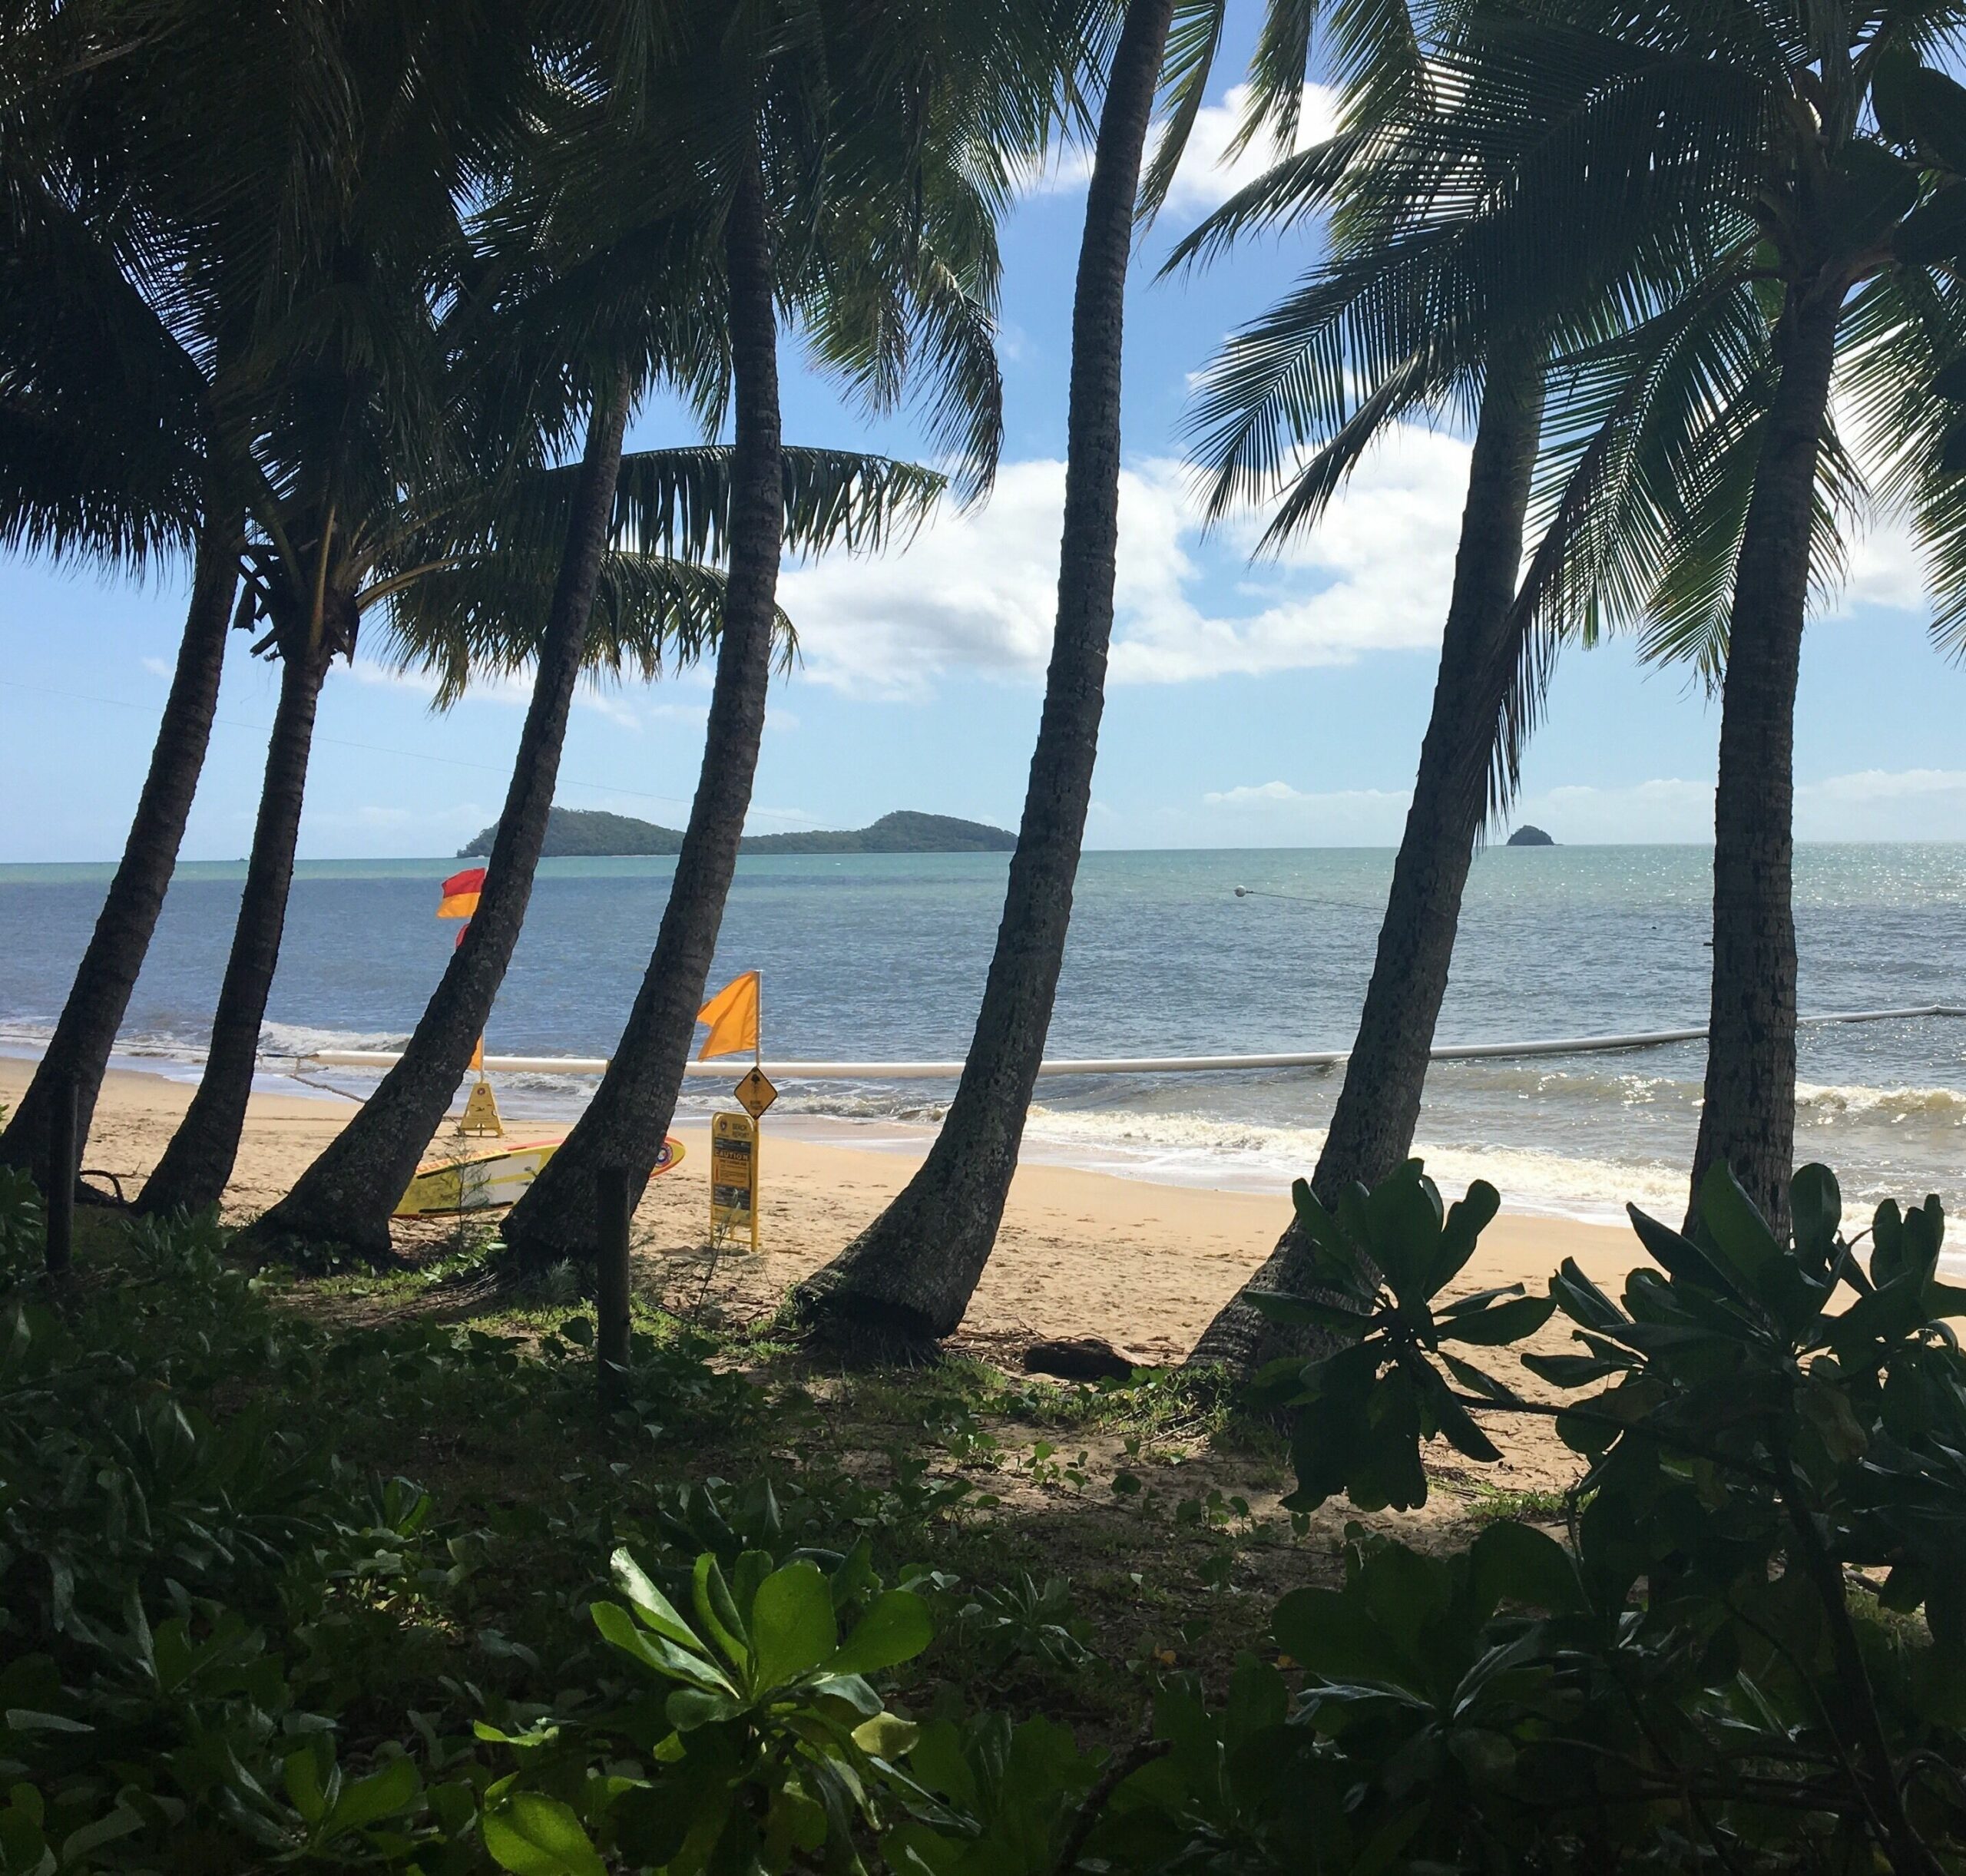 Have a 'beach Break' at the Best Beach in Cairns!